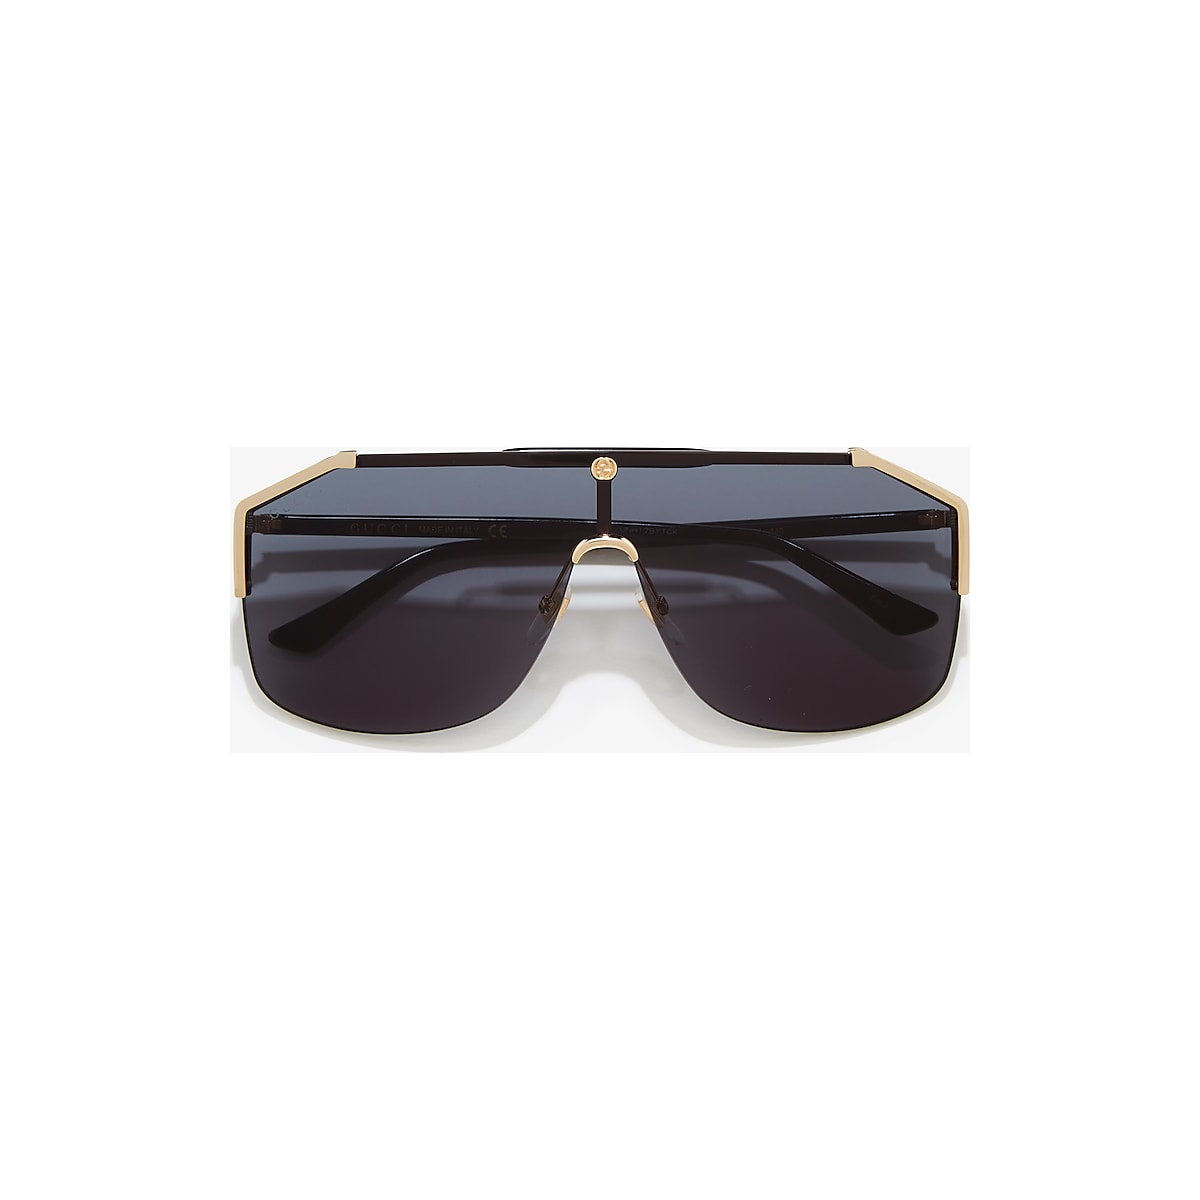 Gucci GG0291S 60 Grey & Grey Sunglasses | Sunglass Hut Canada